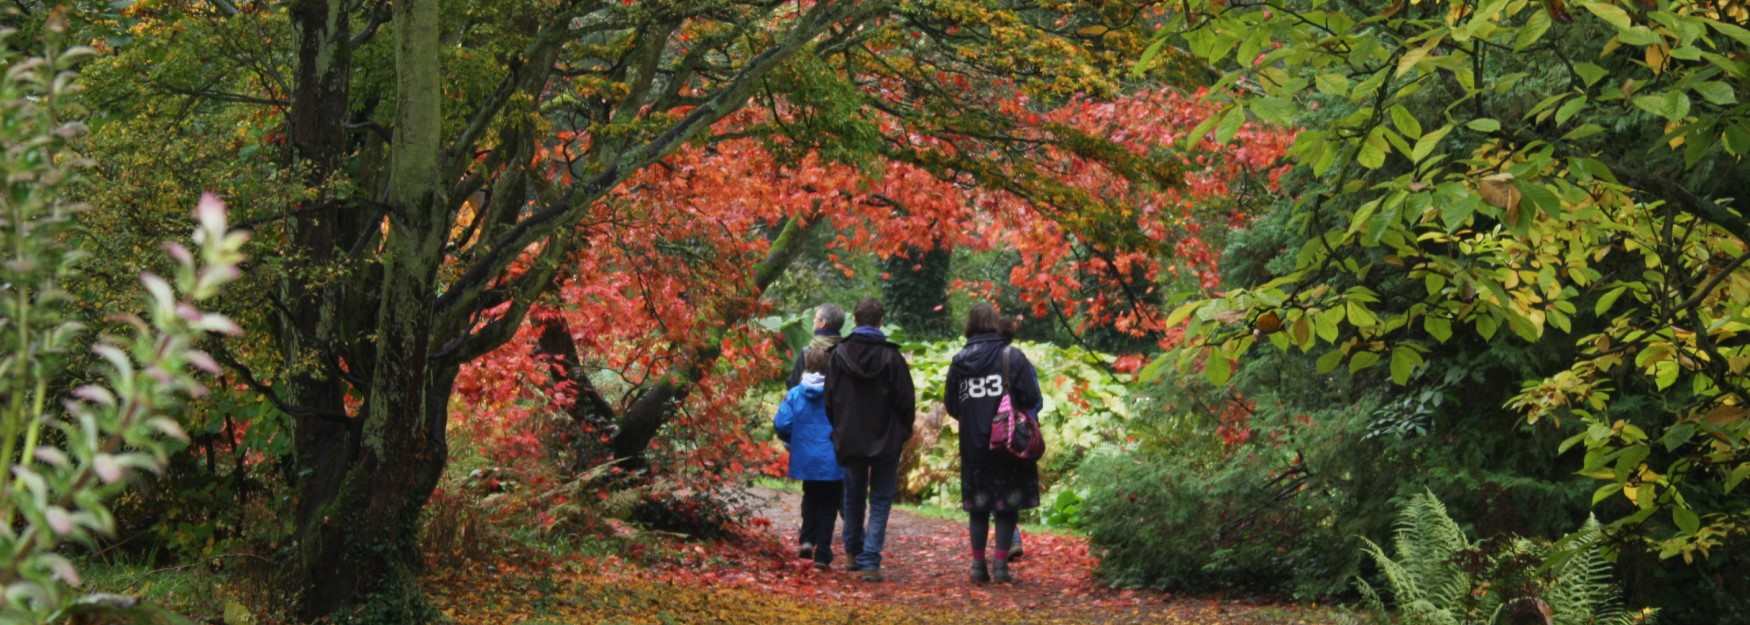 Family walking through Batsford Arboretum in the autumn